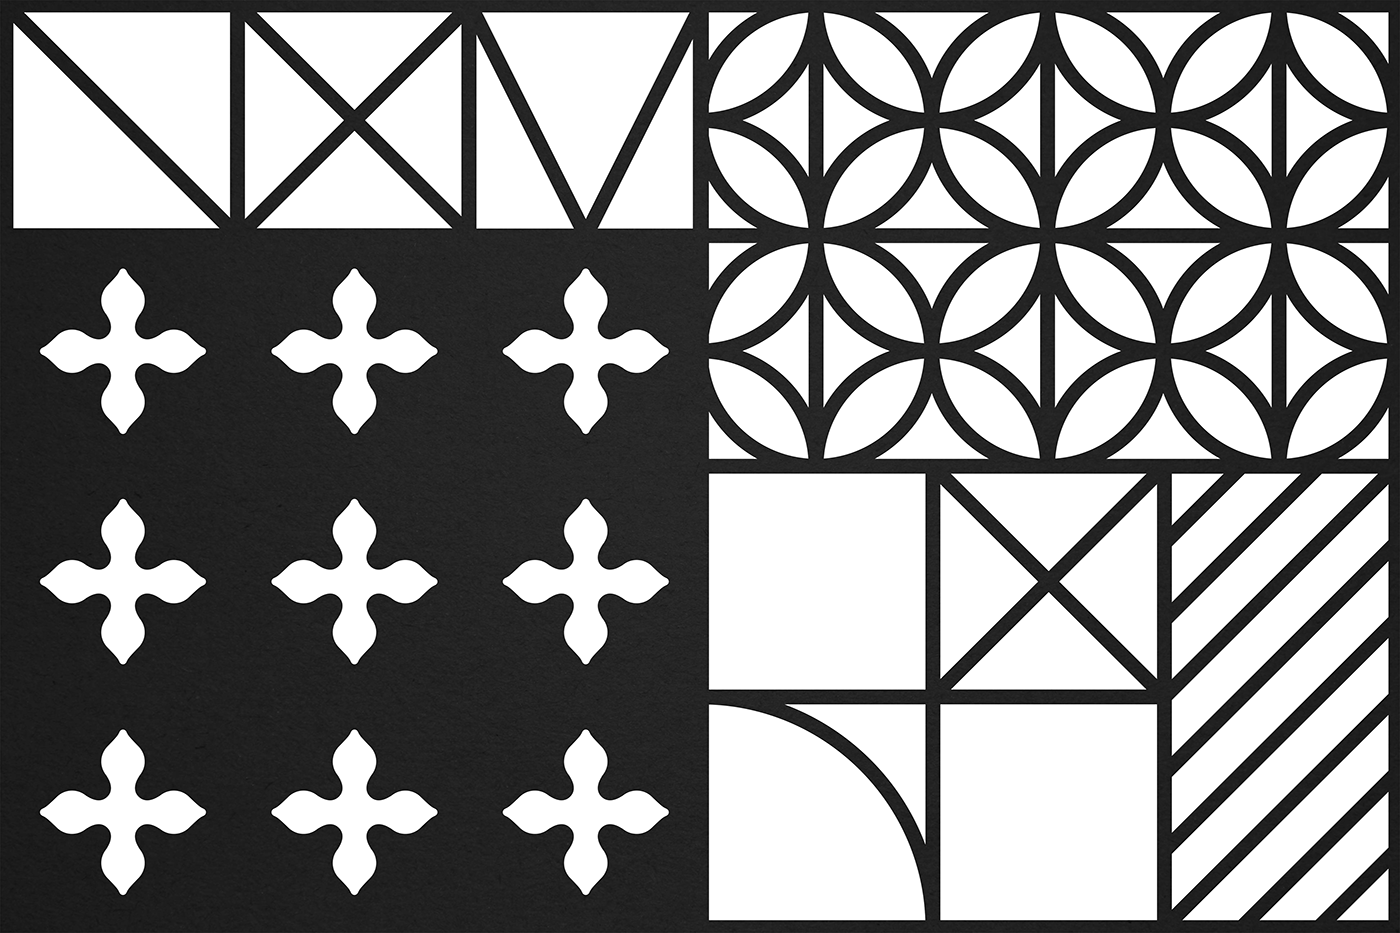 Anagrama mexico swiss Switzerland Helveti black pattern flags regional market